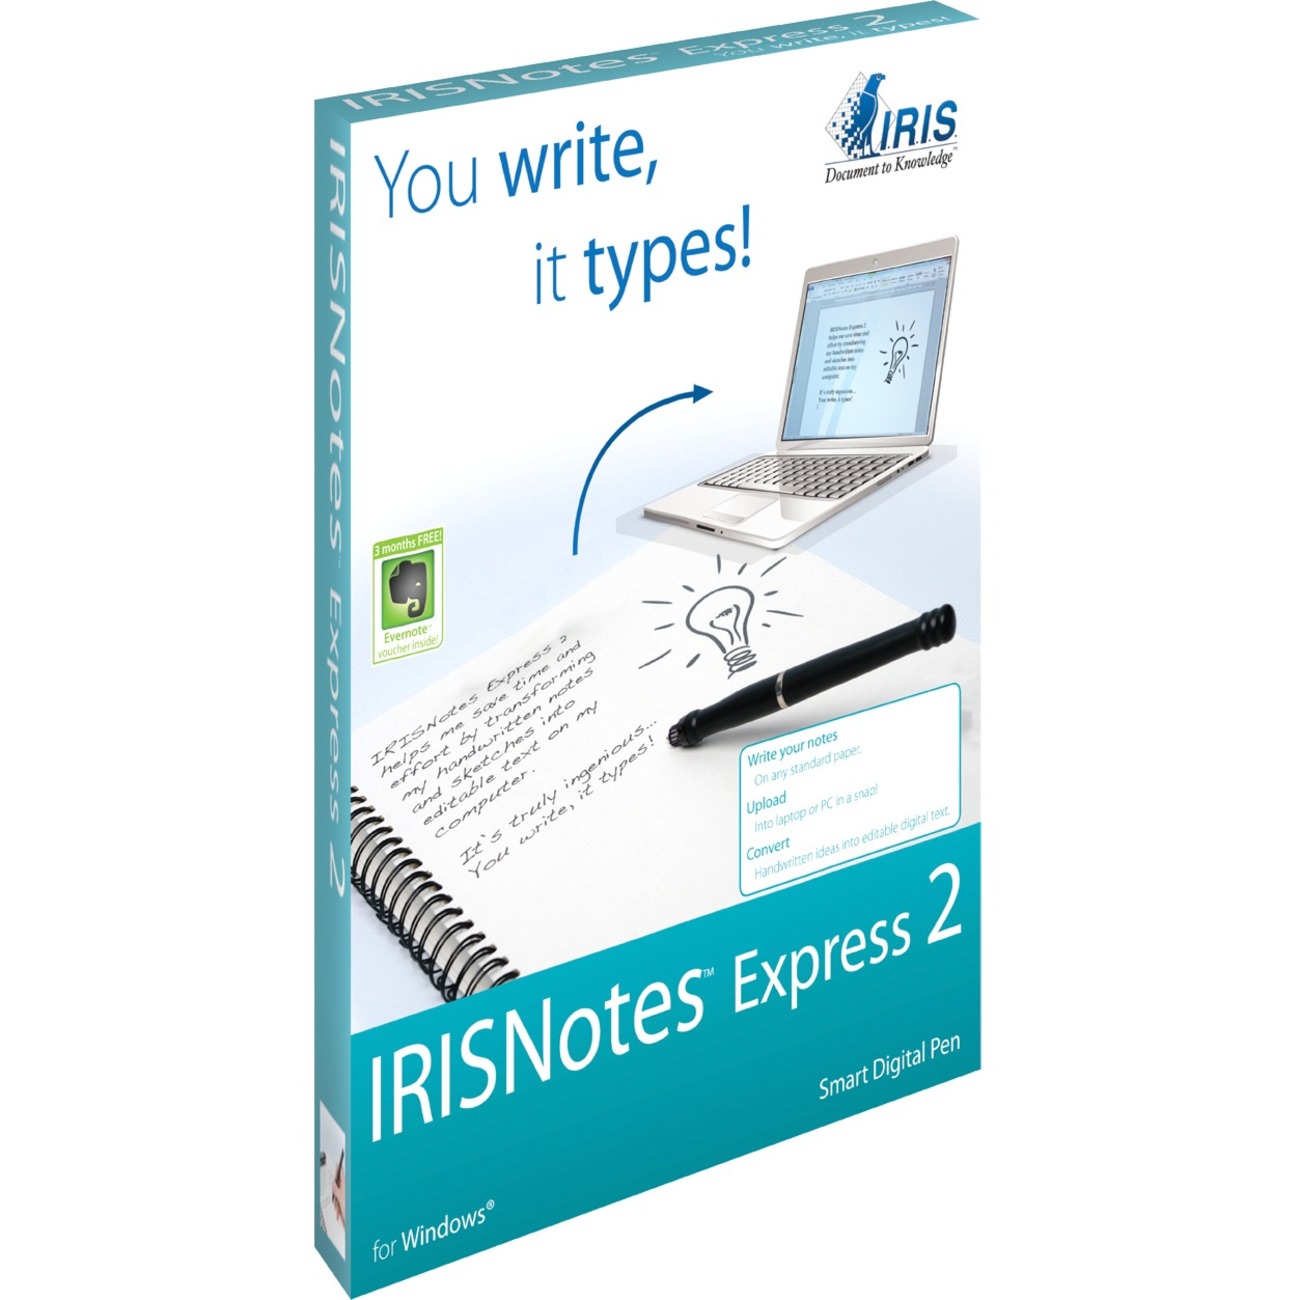 IRIS IRISnotes Express 2 Digital Pen